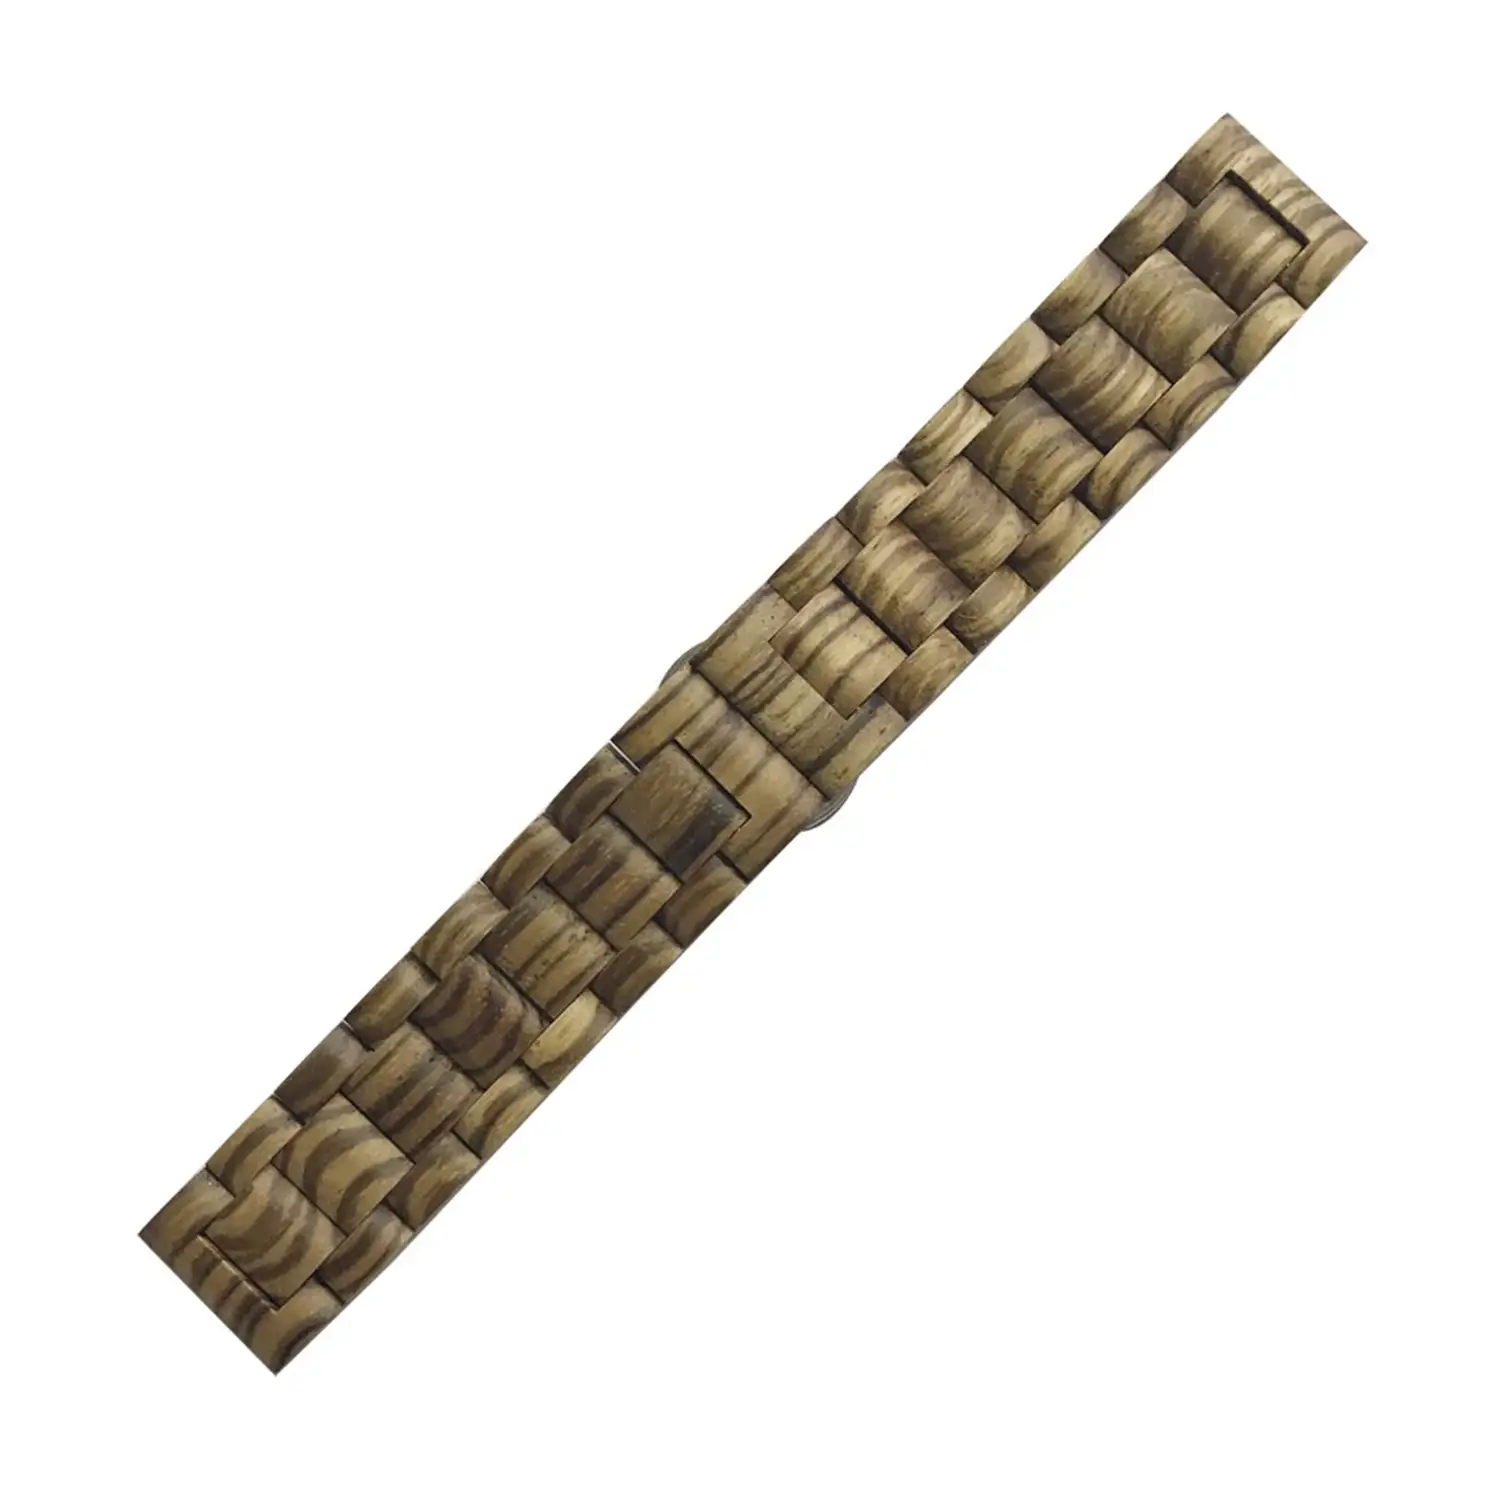 Correa universal de madera natural bambú para relojes de 22mm.Sistema Quick Release de fácil cambio.